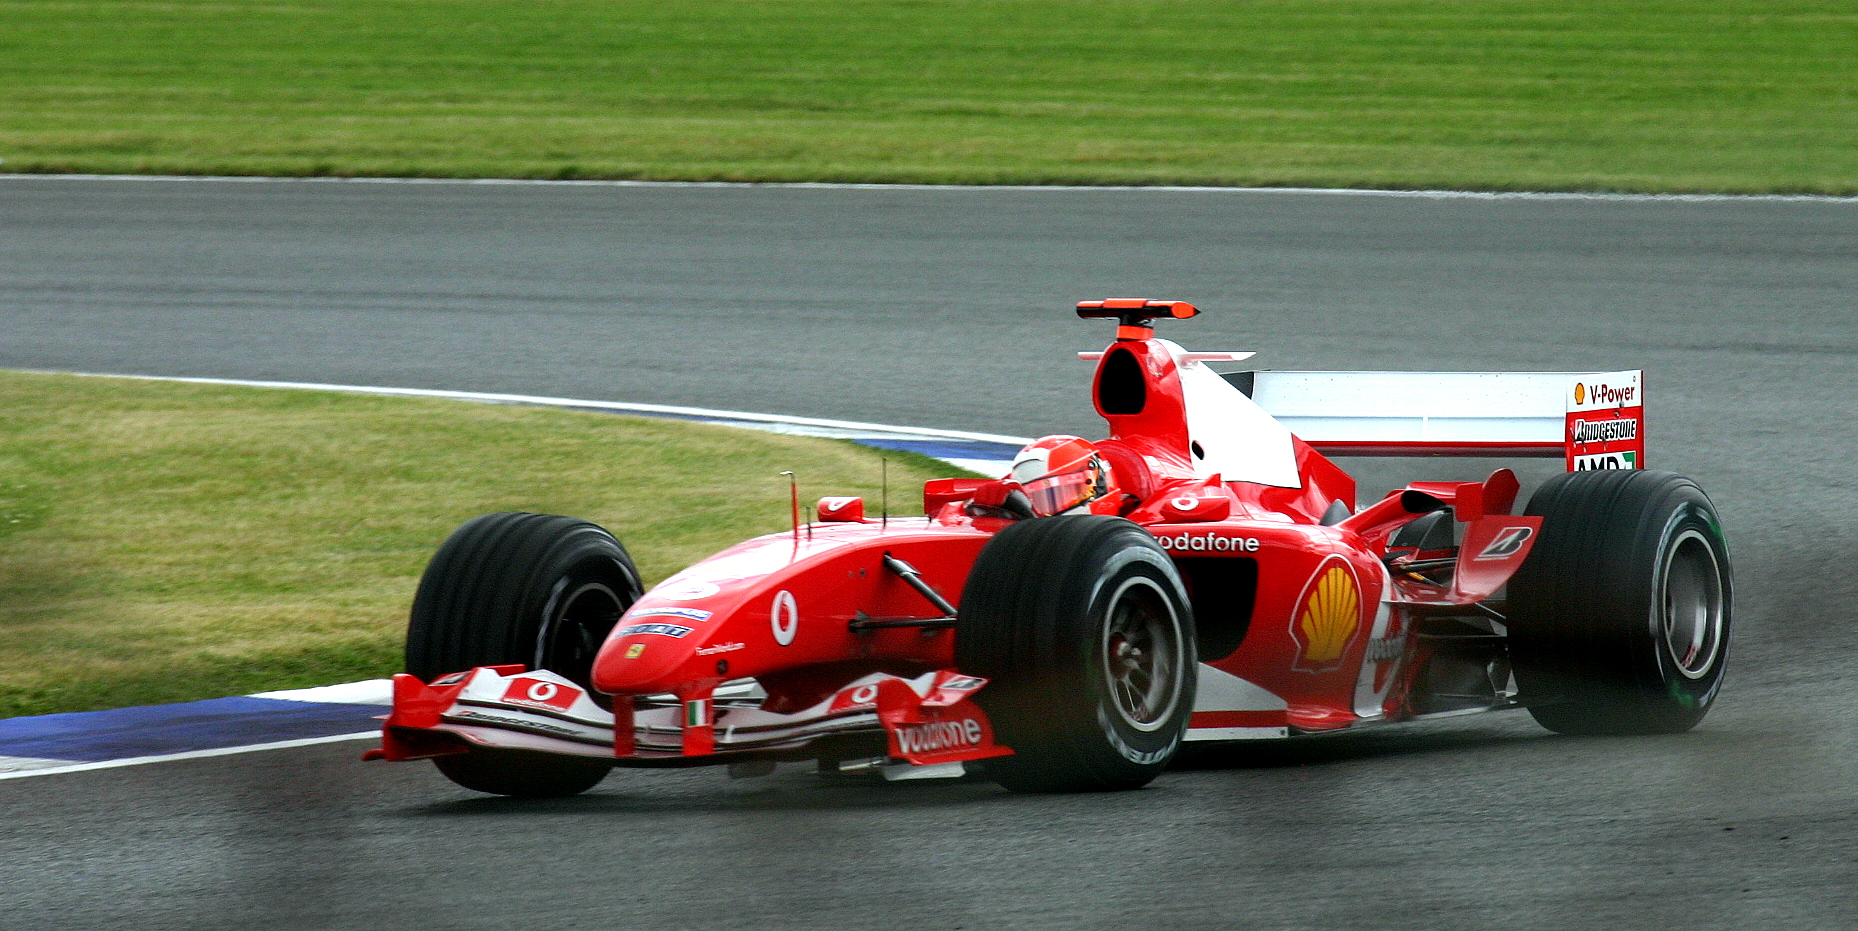 Ferrari F2004 Wallpapers - Top Free Ferrari F2004 Backgrounds ...